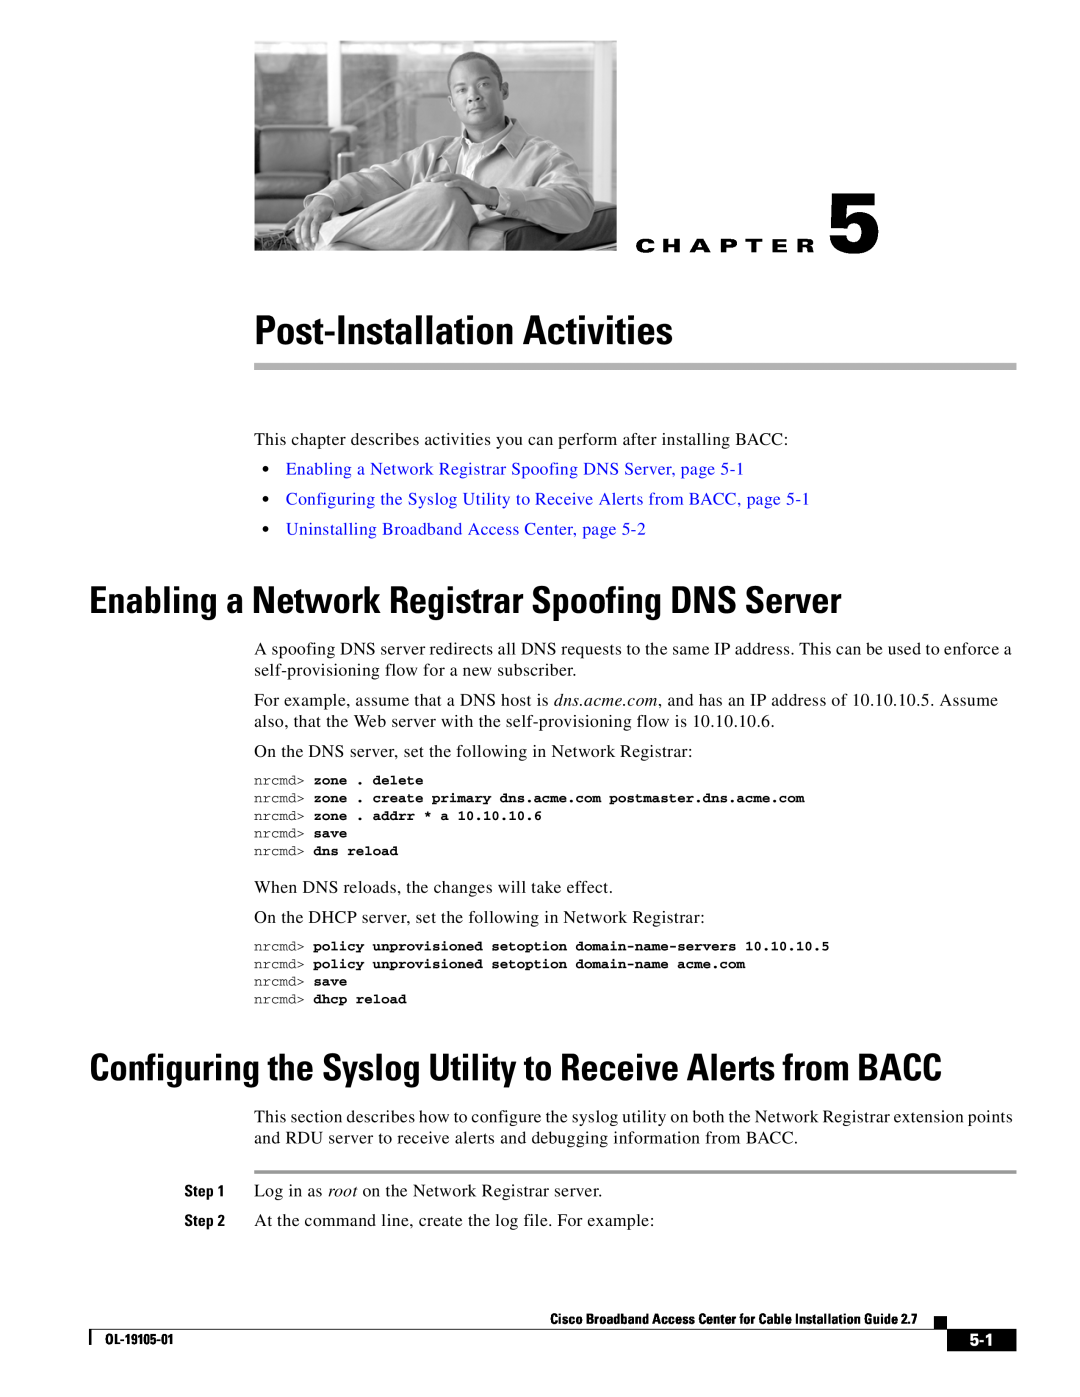 Cisco Systems Broadband Access Center manual Post-Installation Activities, Enabling a Network Registrar Spoofing DNS Server 